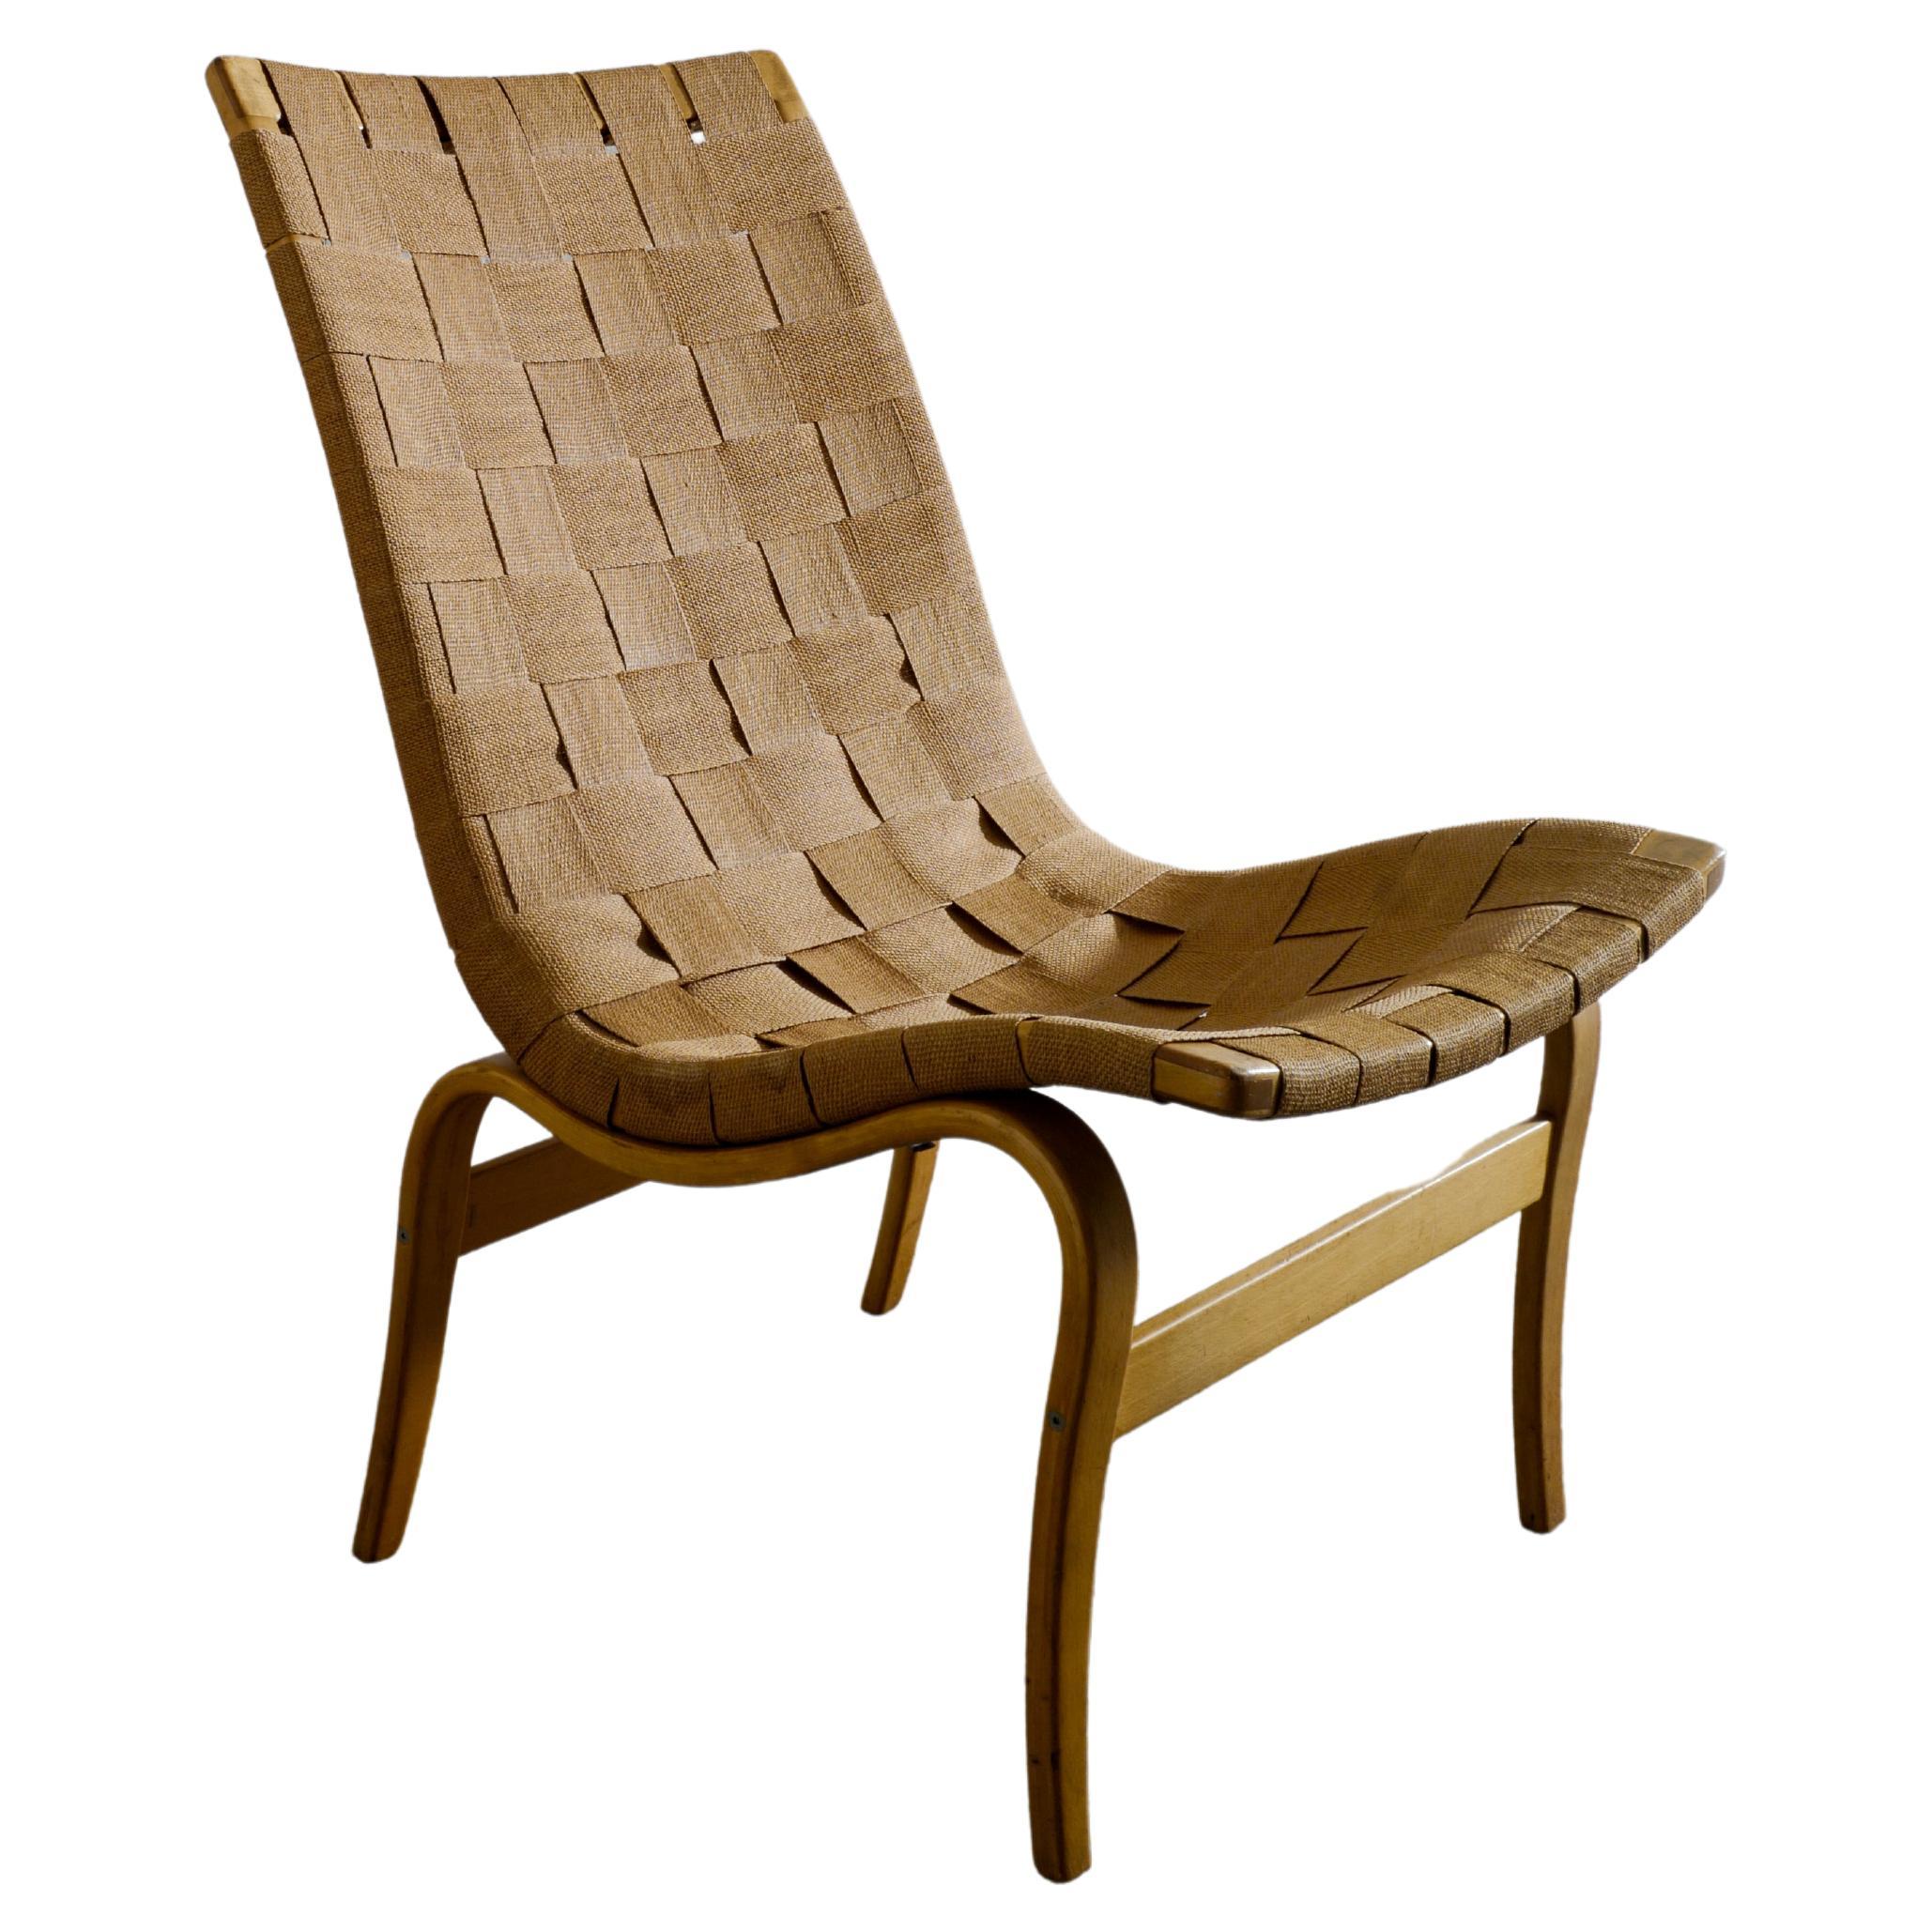 Bruno Mathsson Mid-Century Easy Chair "Arbetsstolen" Produced in Sweden, 1960s